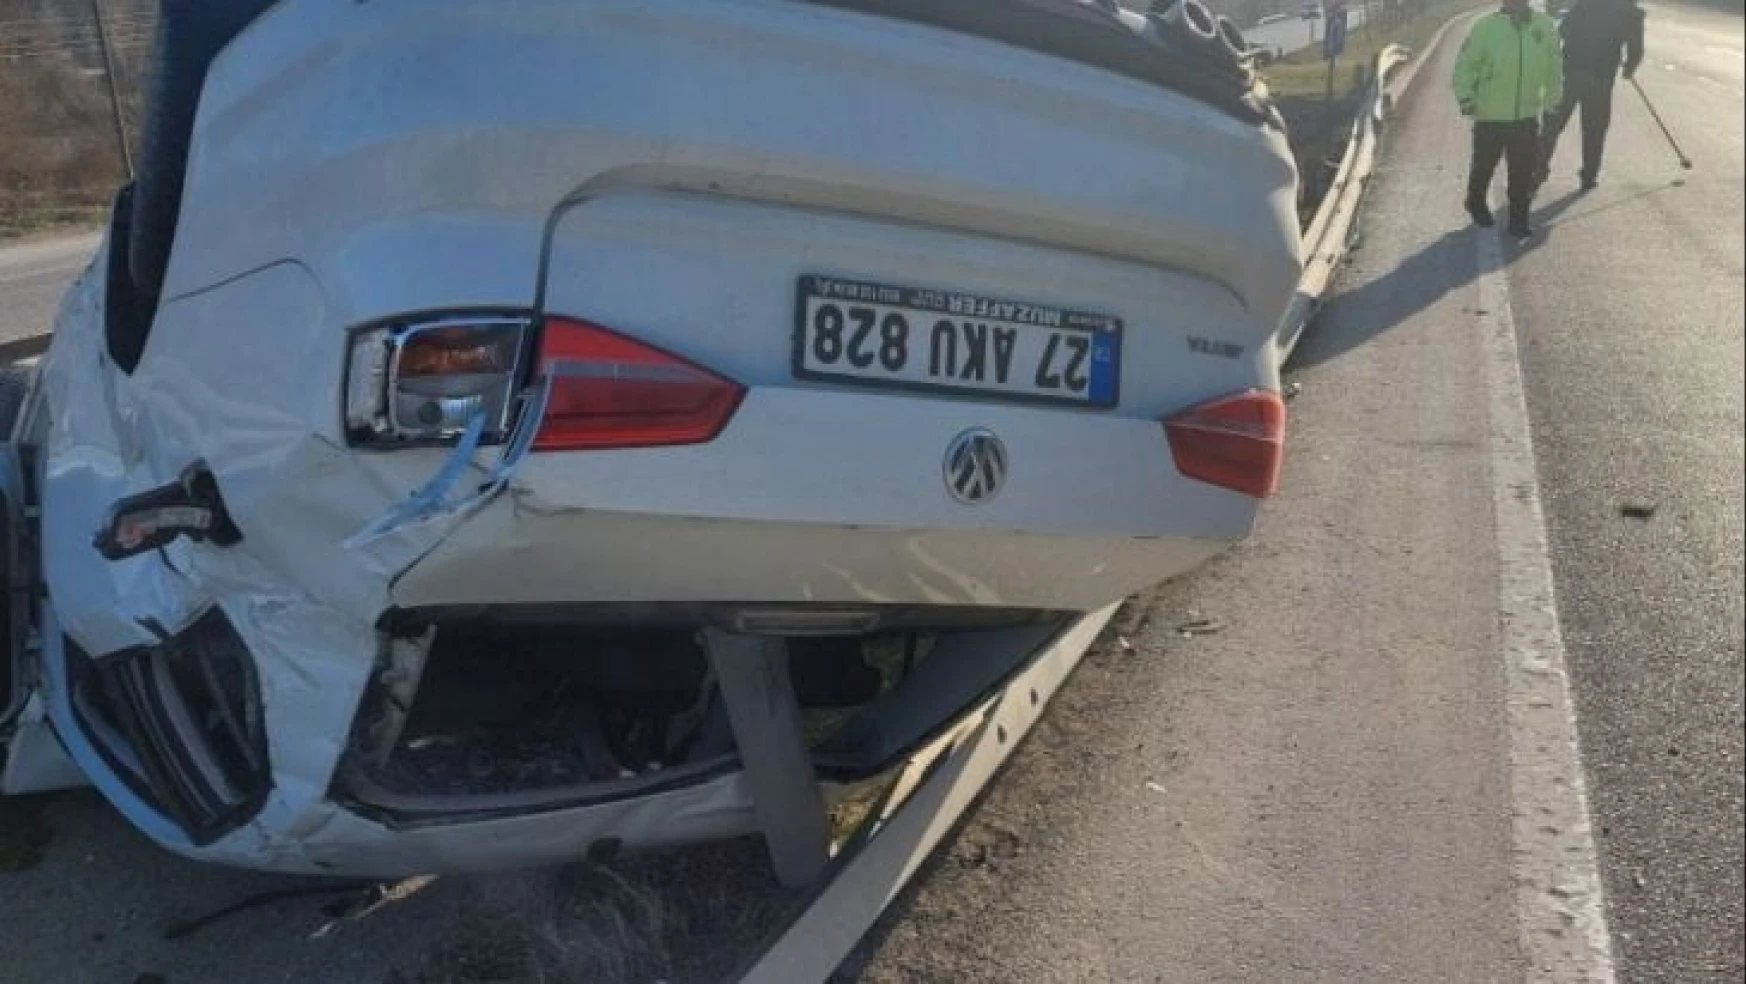 Samsun'da otomobil takla attı: 2 yaralı